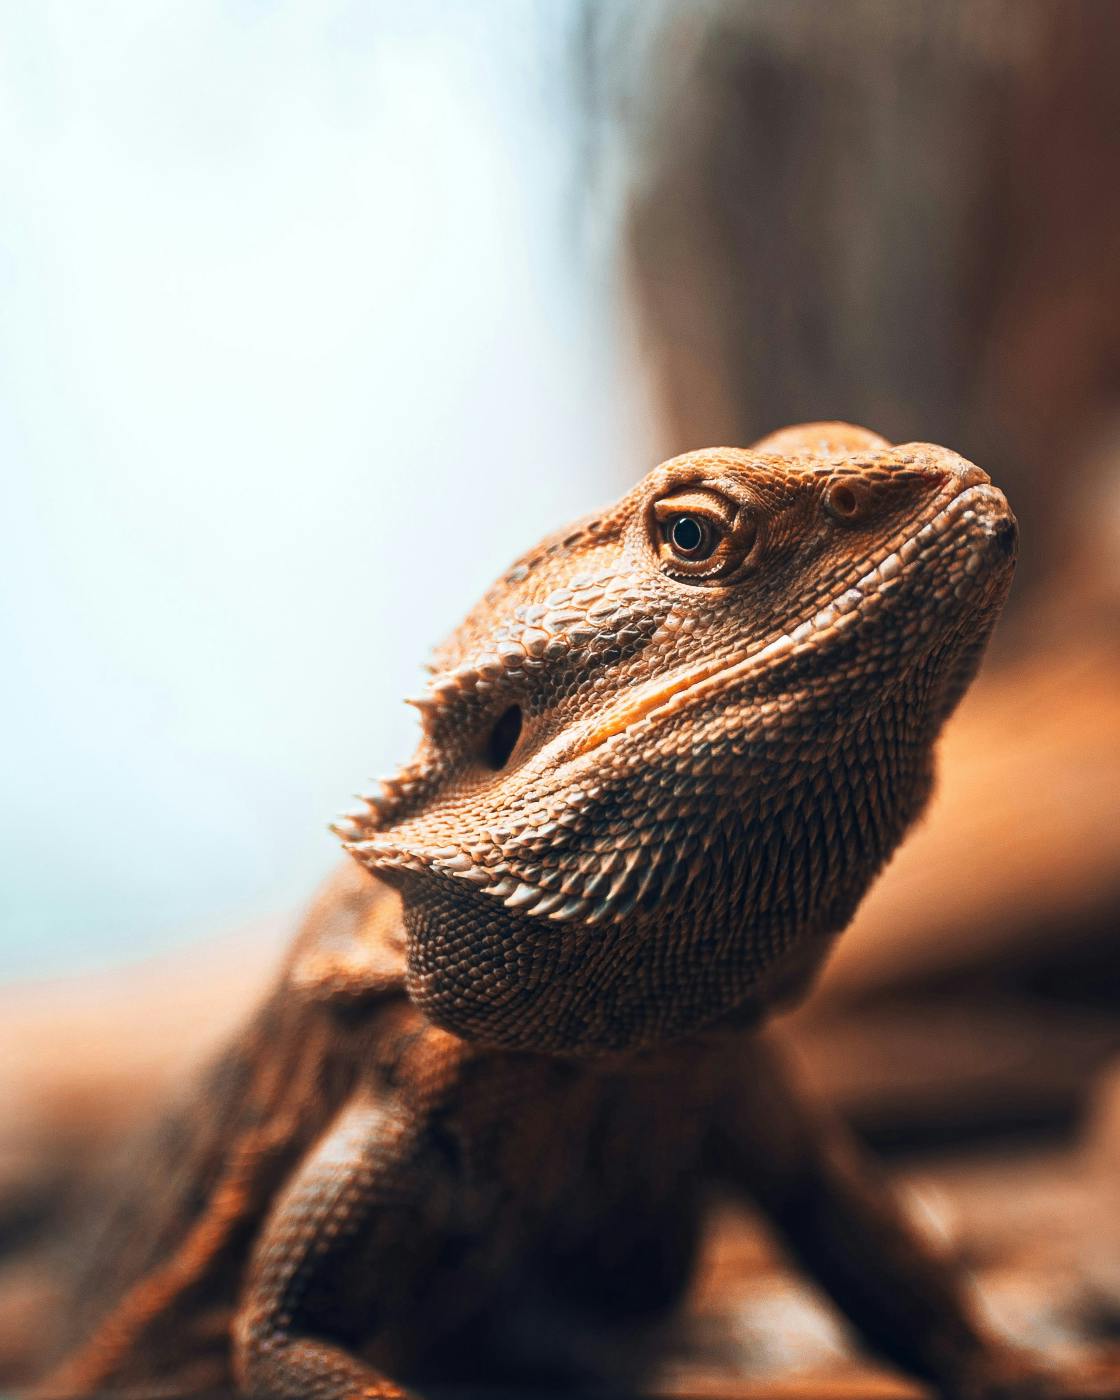 A bearded dragon lizard